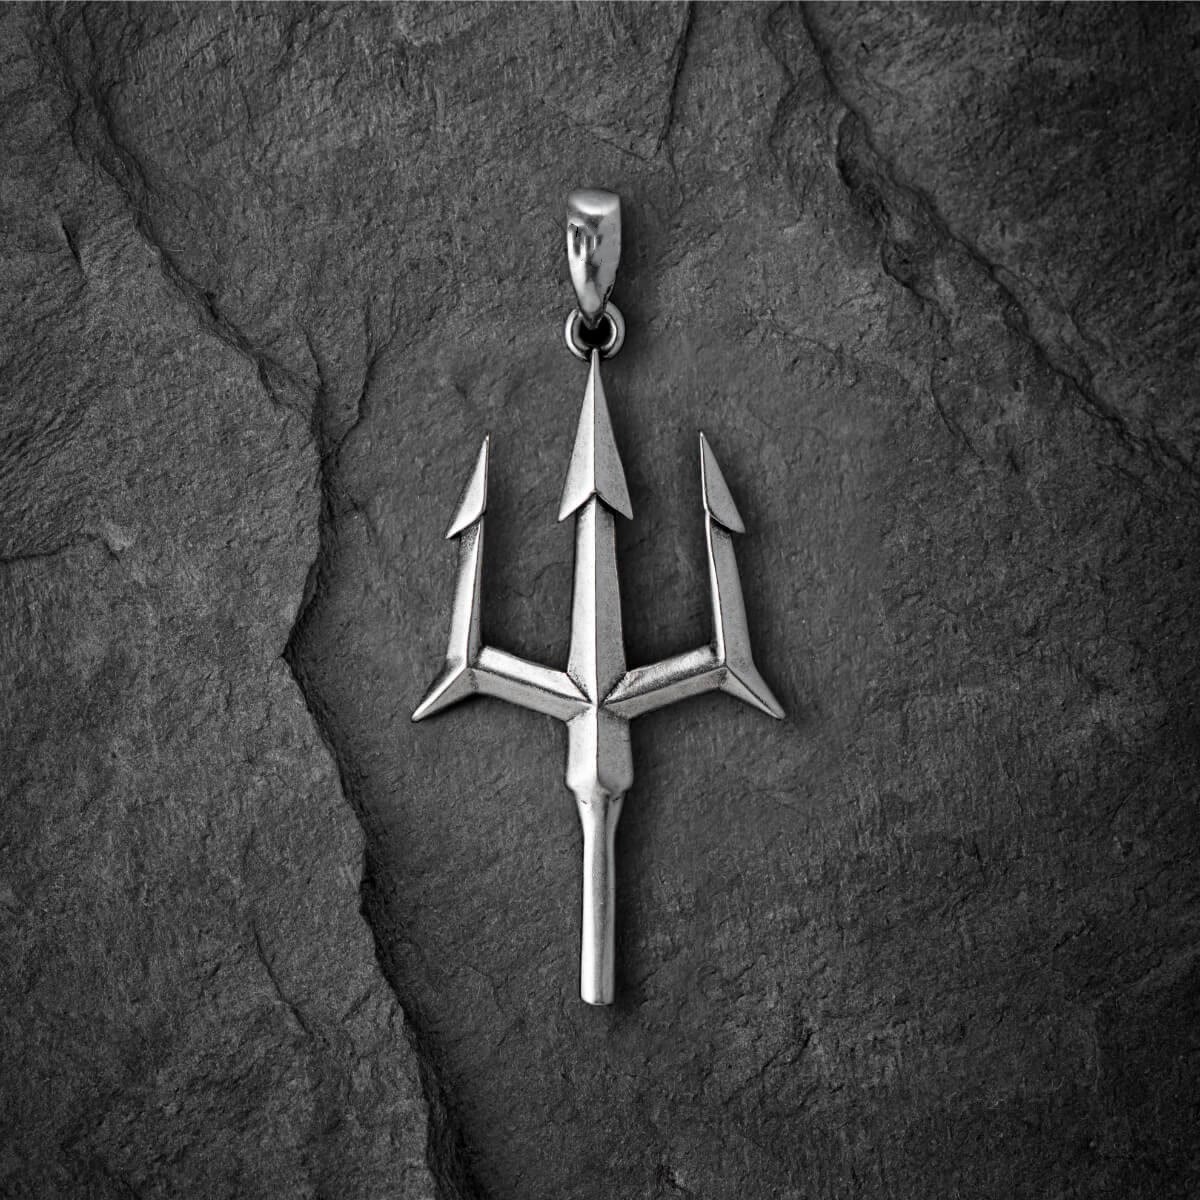 Poseidon's Trident Necklace